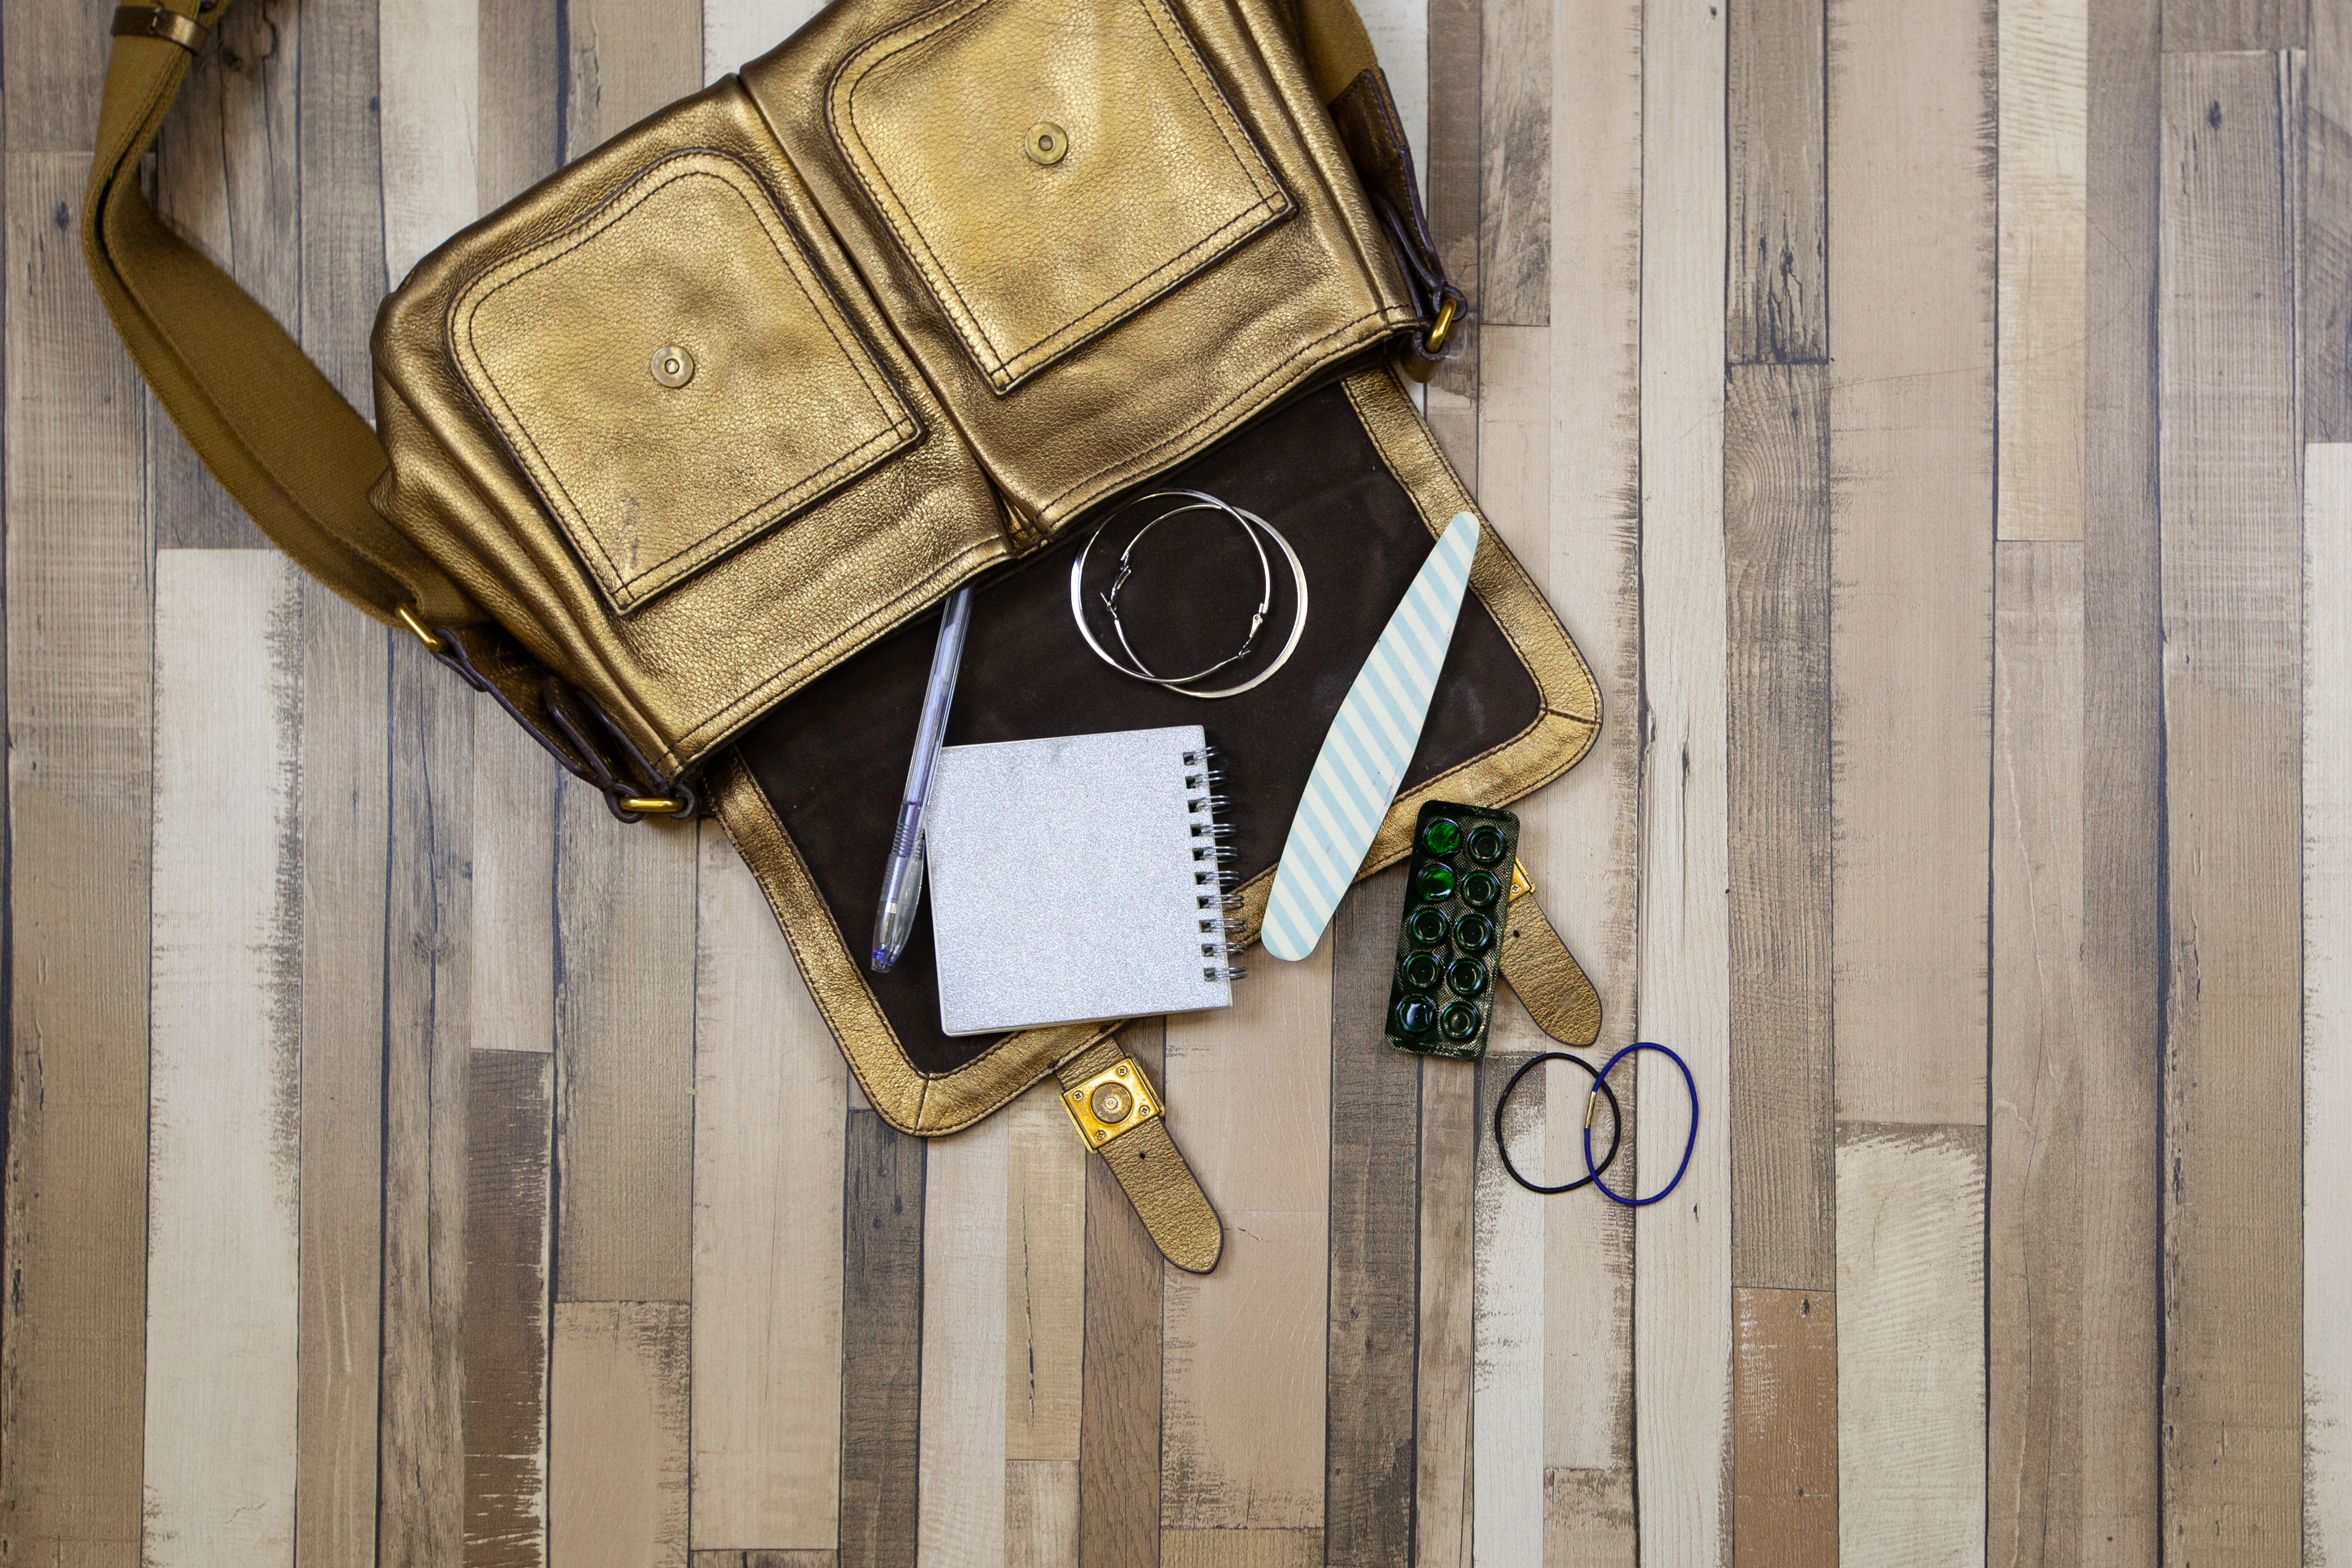 The golden bag fell to the wooden floor | Source: Shutterstock